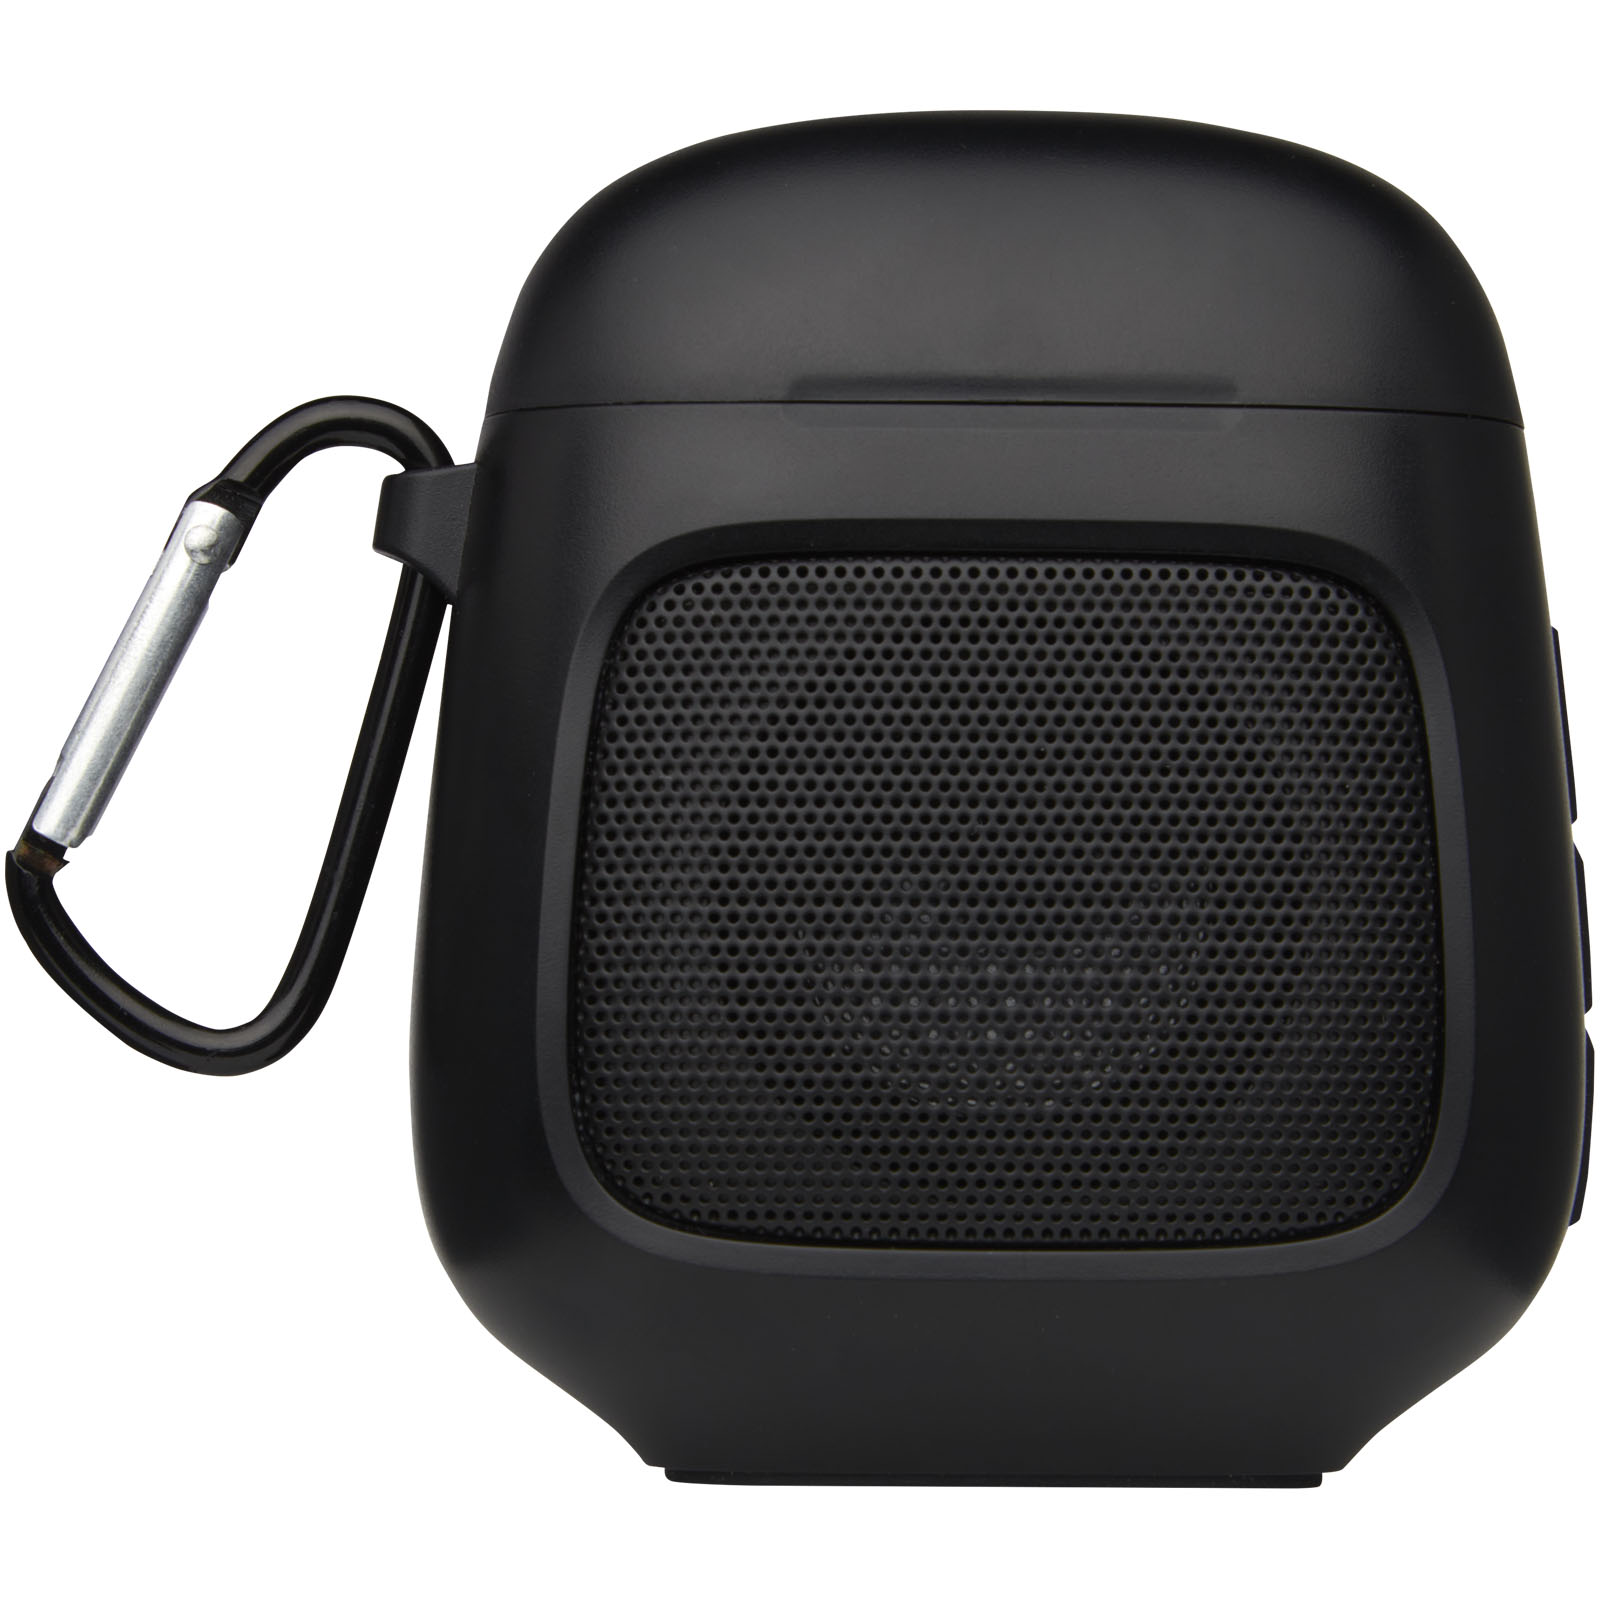 Advertising Speakers - Remix auto pair True Wireless earbuds and speaker - 2